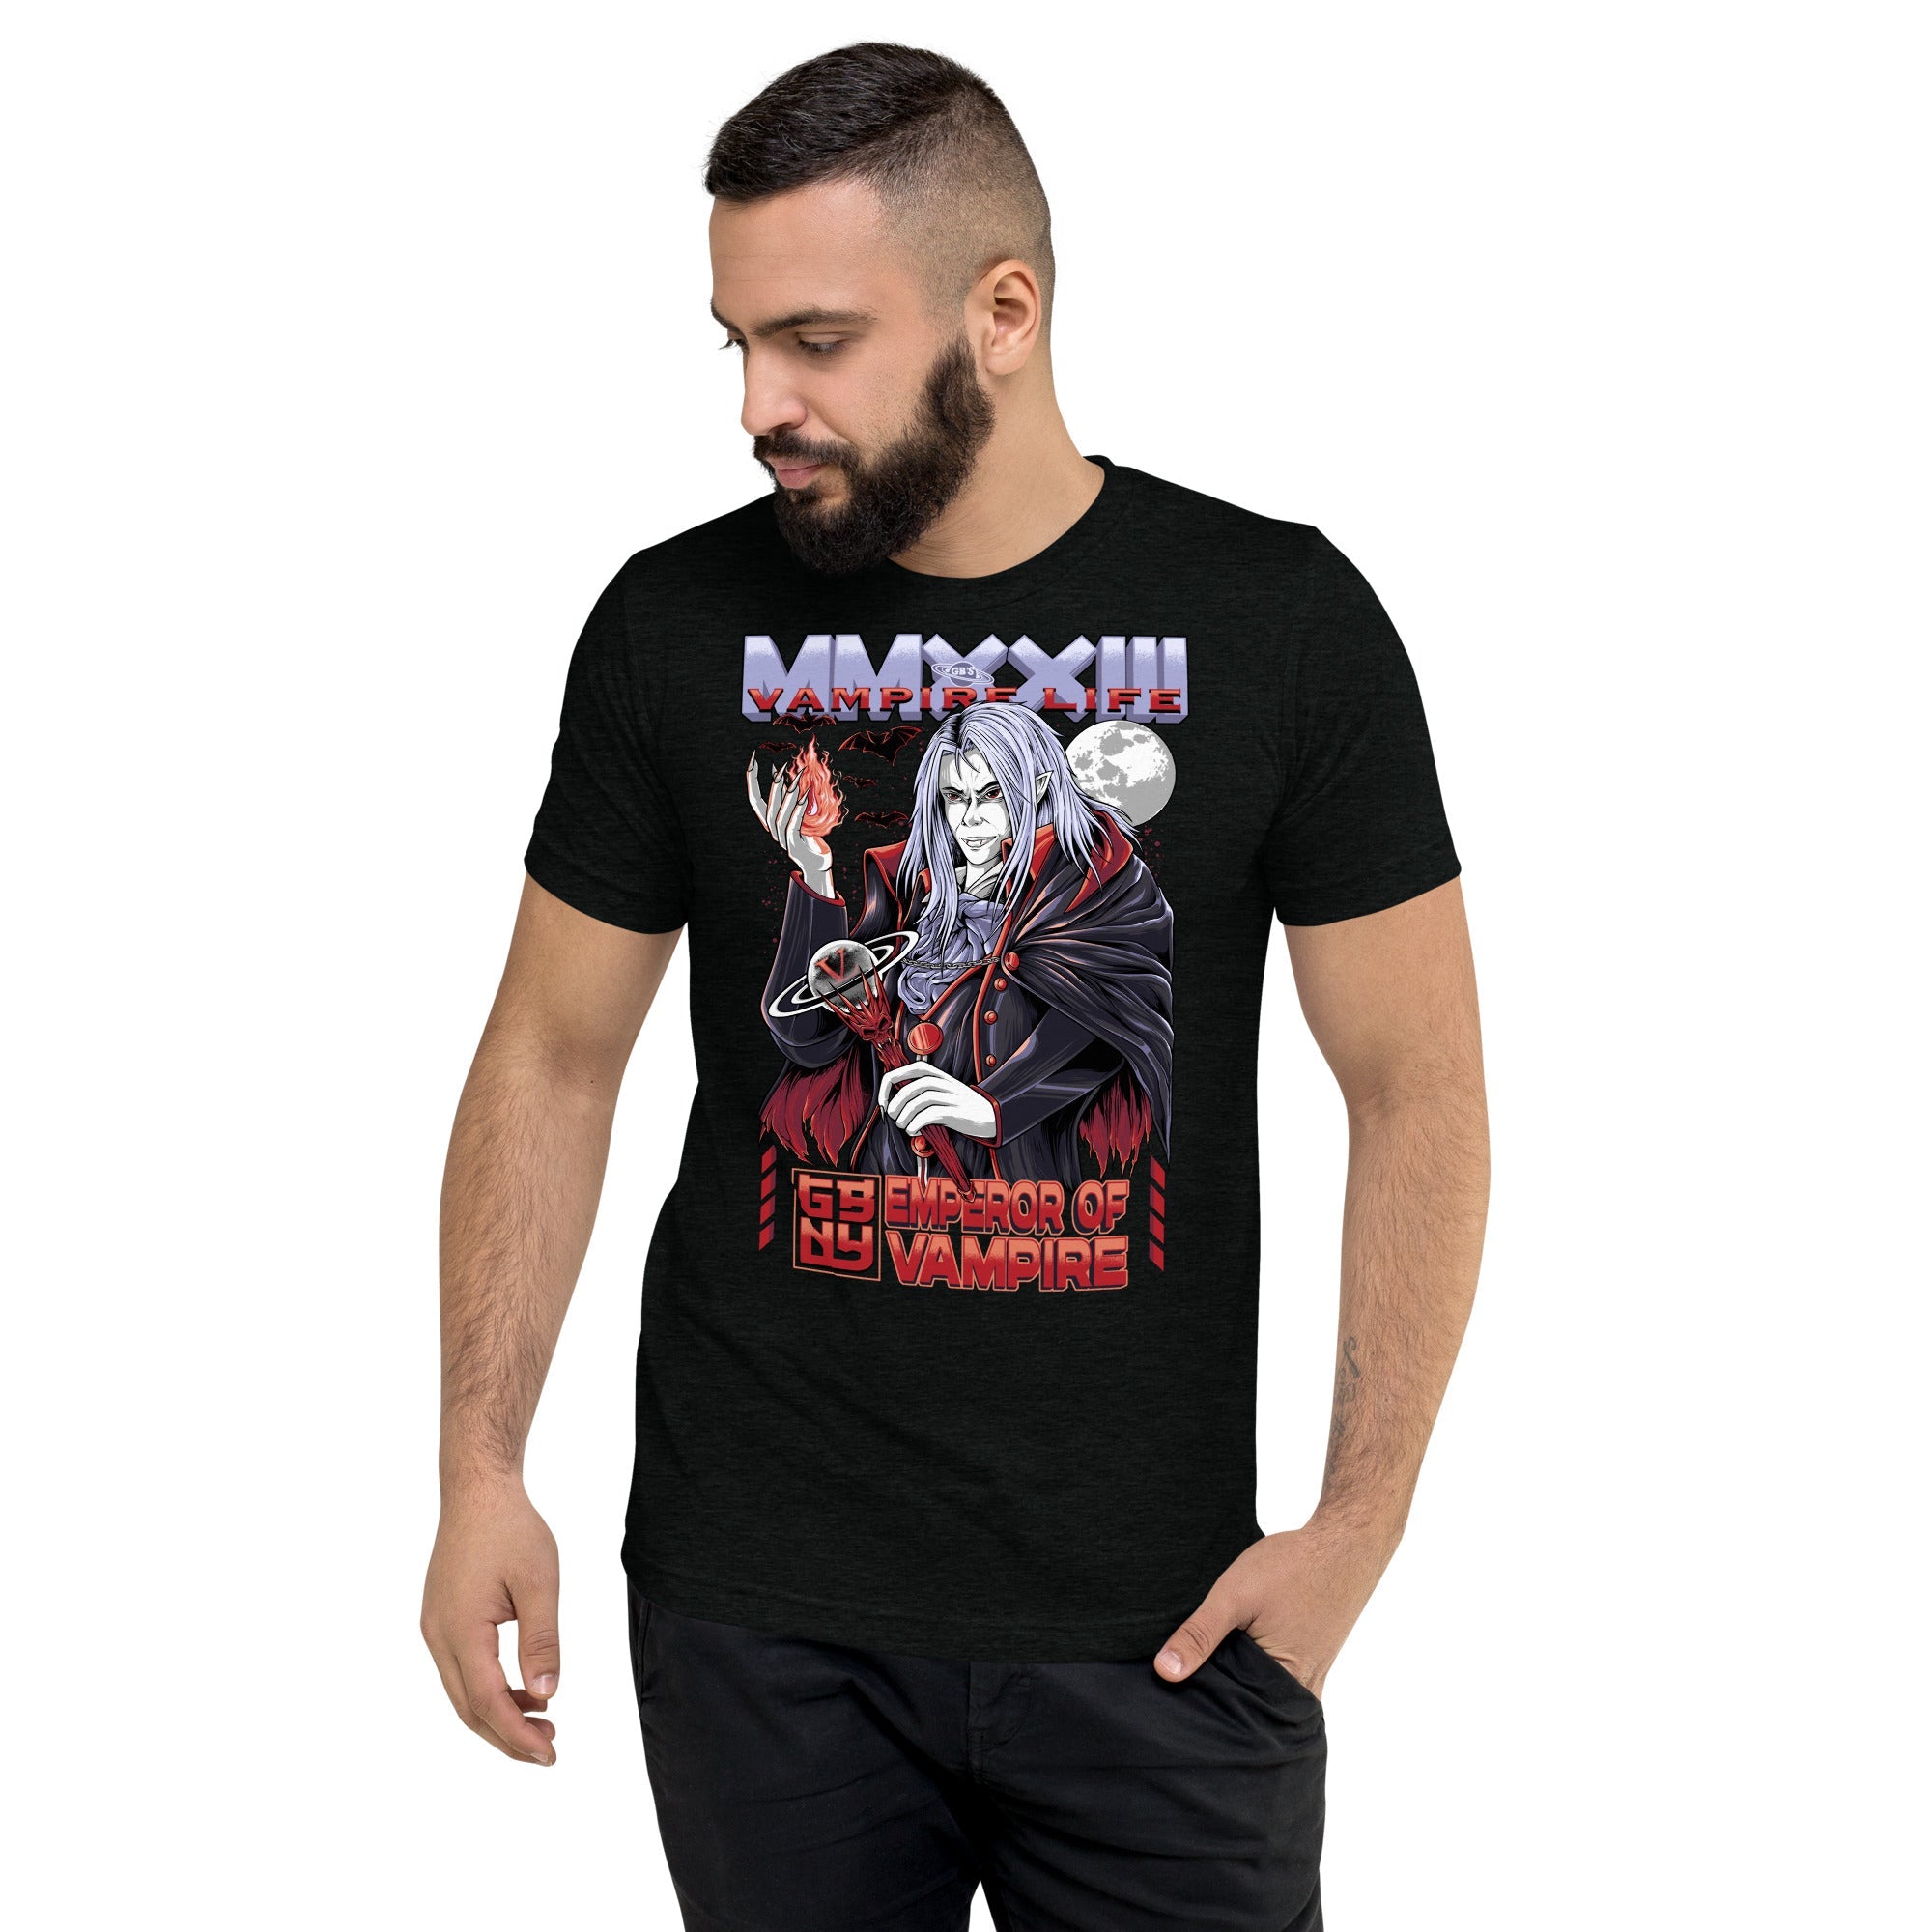 GBNY Solid Black Triblend / XS Vamp Life X GBNY "Emperor Of Vamp" T-shirt - Men's 1895261_6584